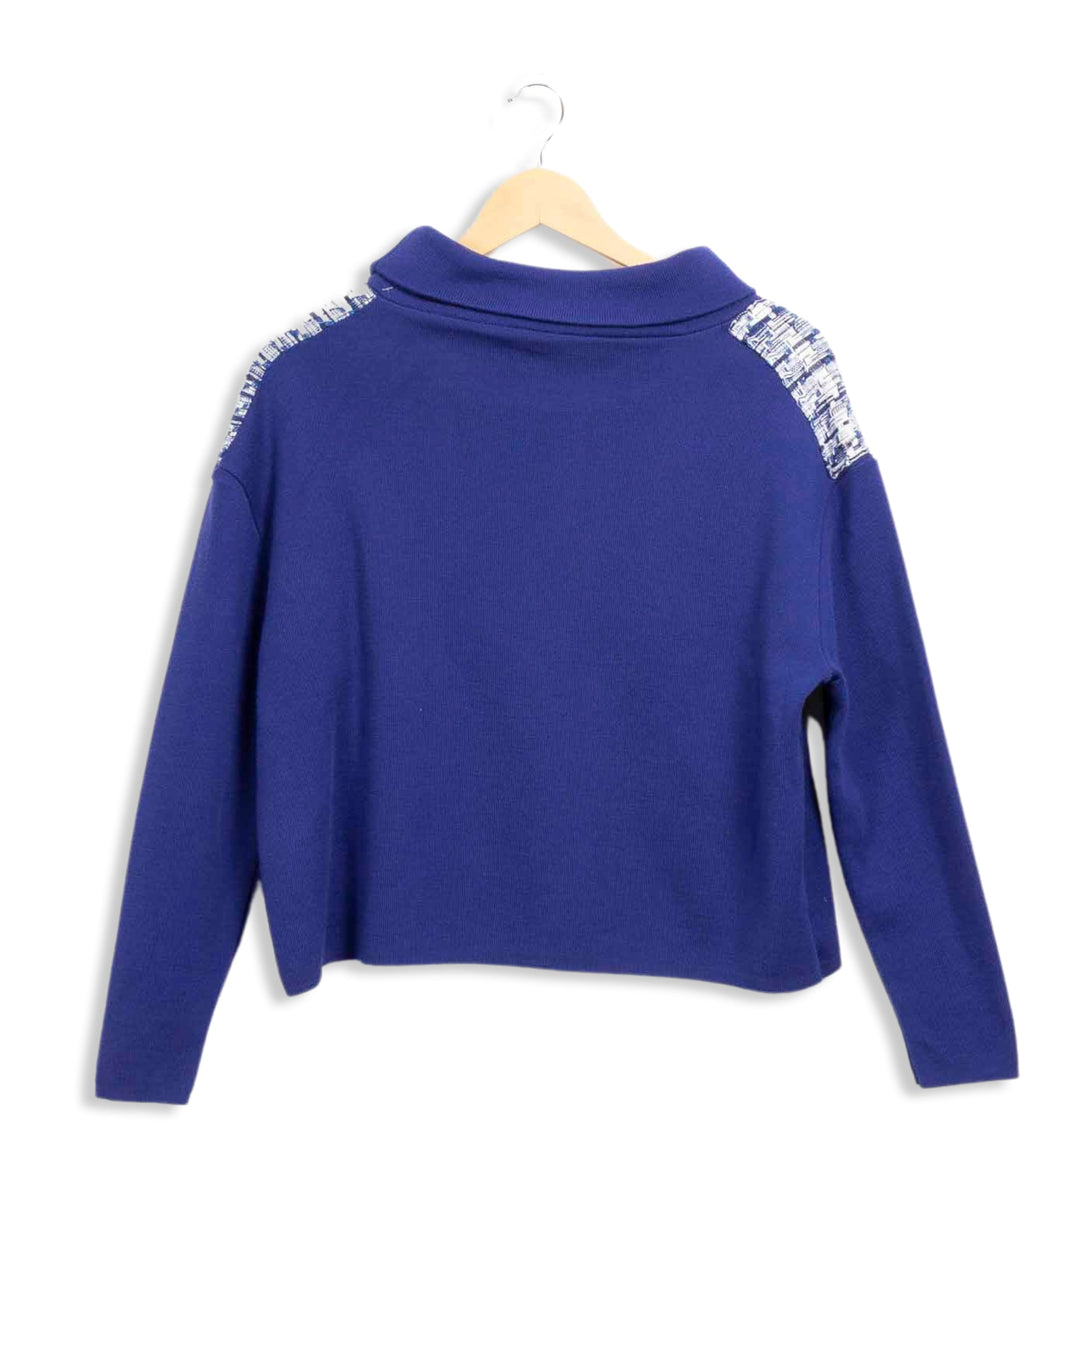 Tweed and Paris sweater - 36